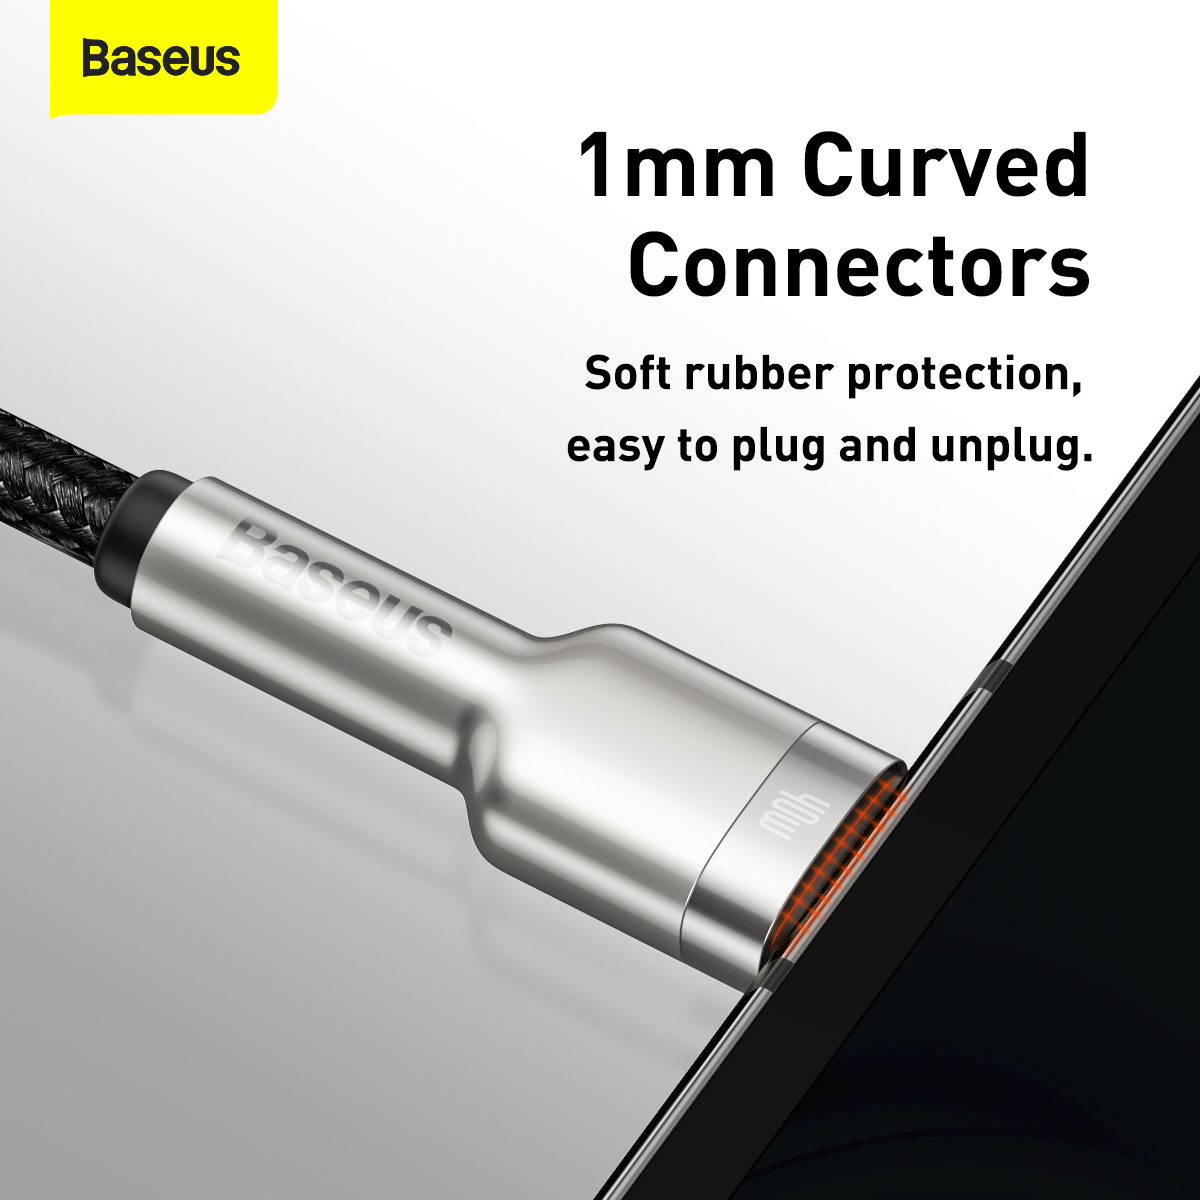 Baseus Cafule USB till USB-C datakabel, 40W, 5A, 1m, svart